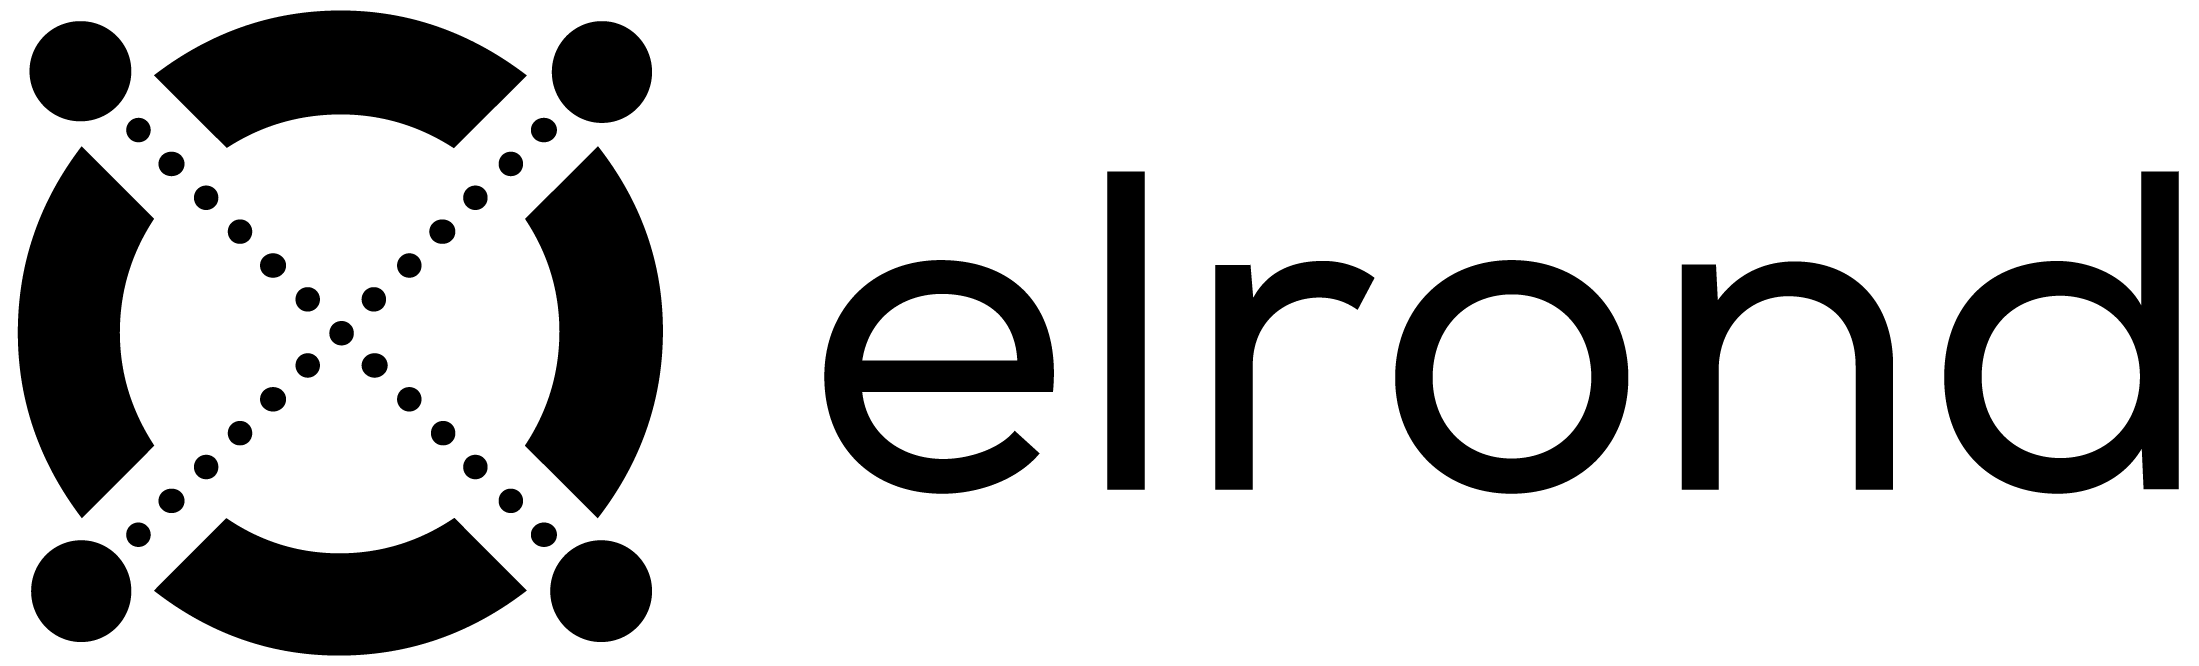 Elrond logo colors